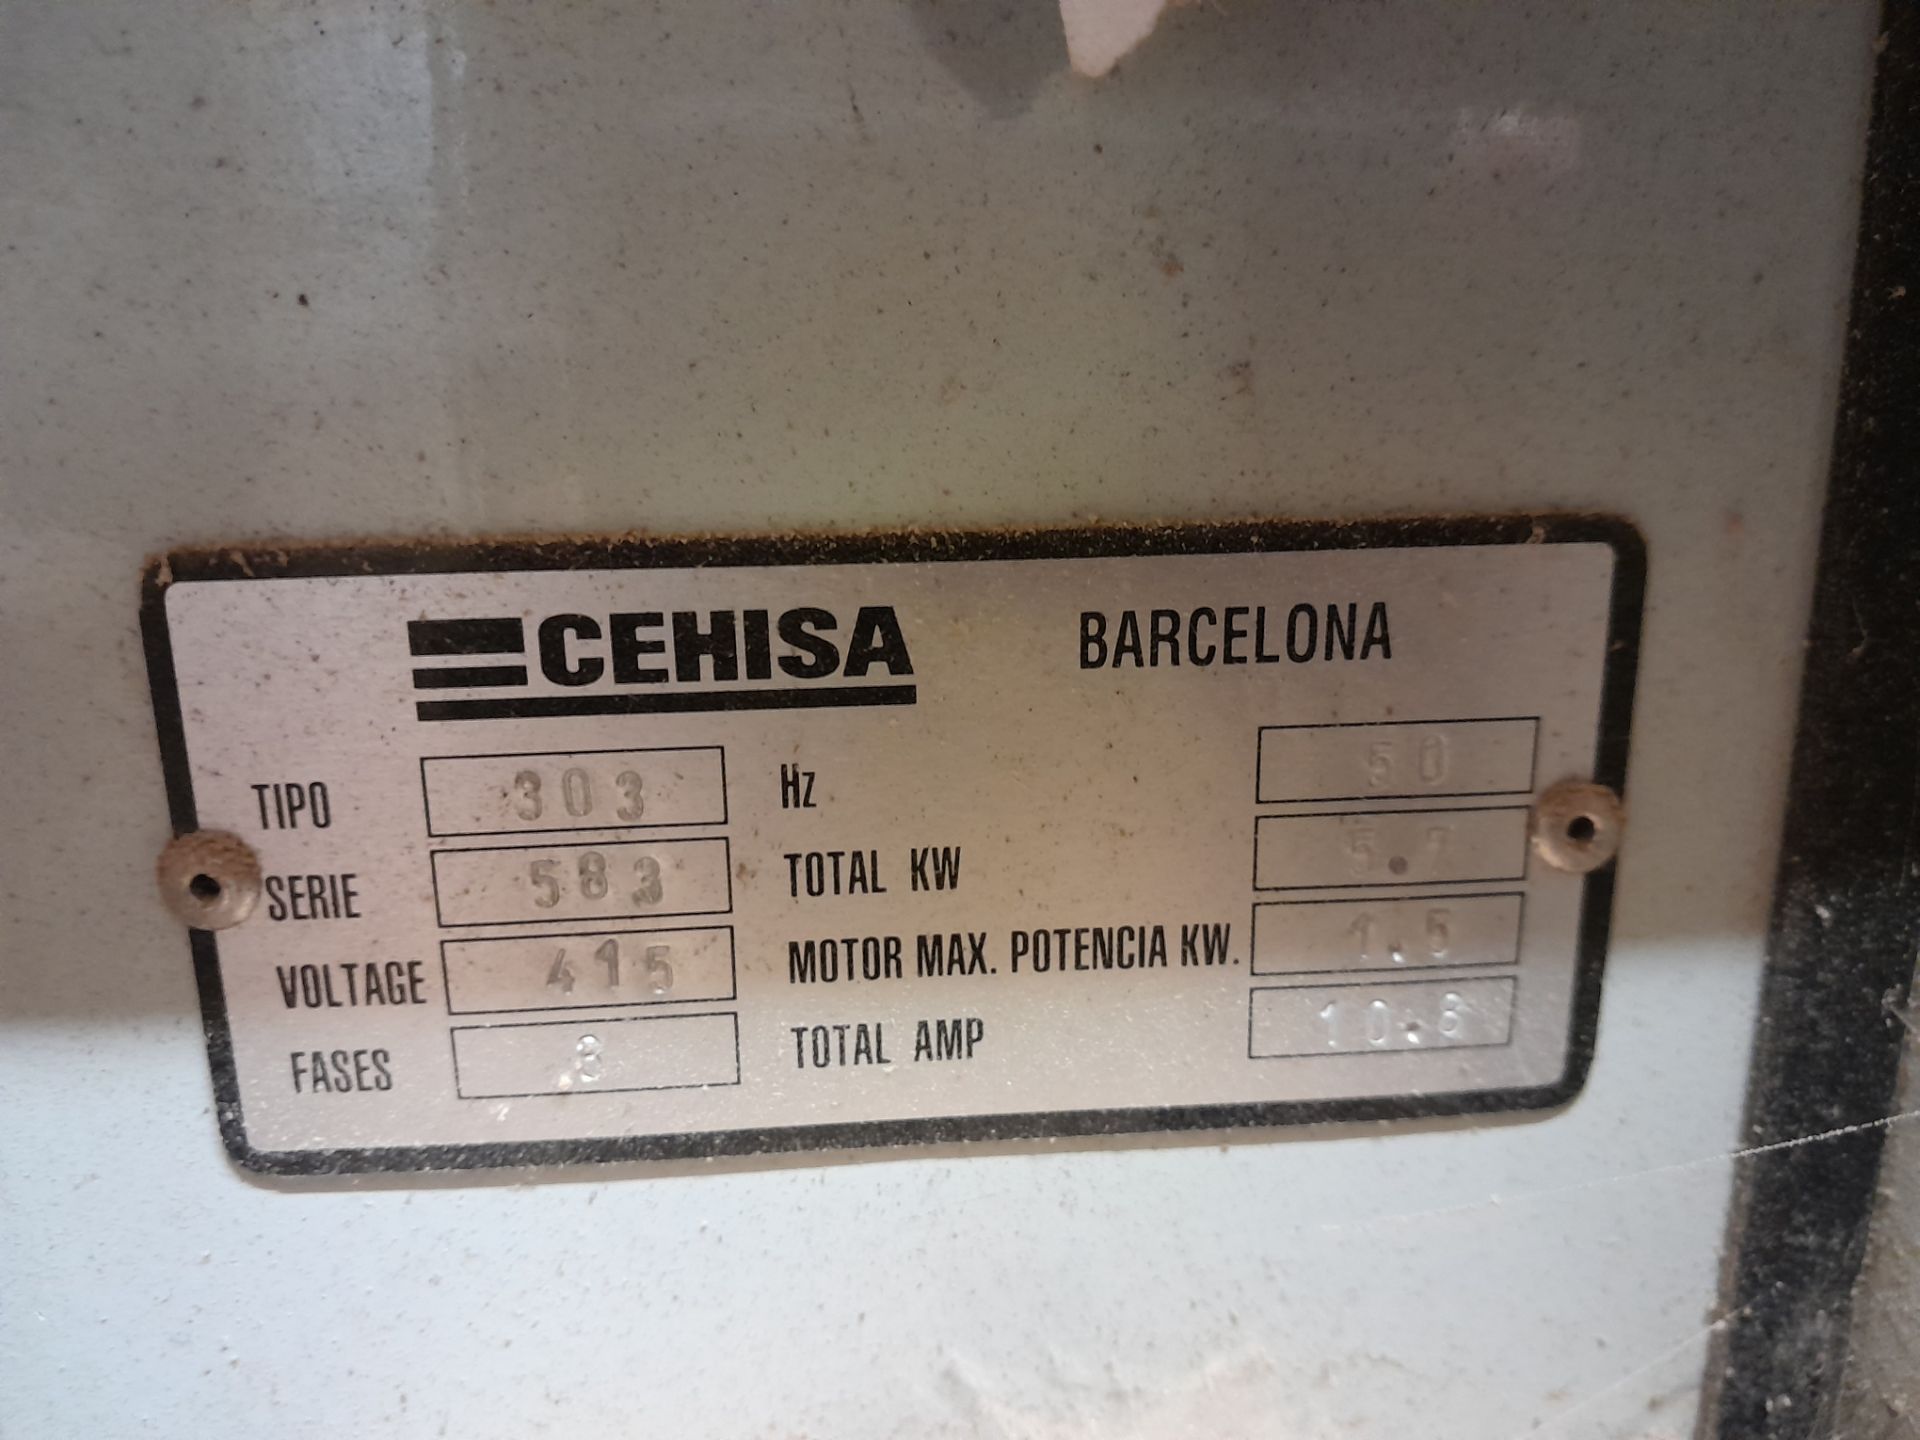 Cehisa Model 303 Edgebander, 583, 5.7KW with Wood - Image 6 of 9